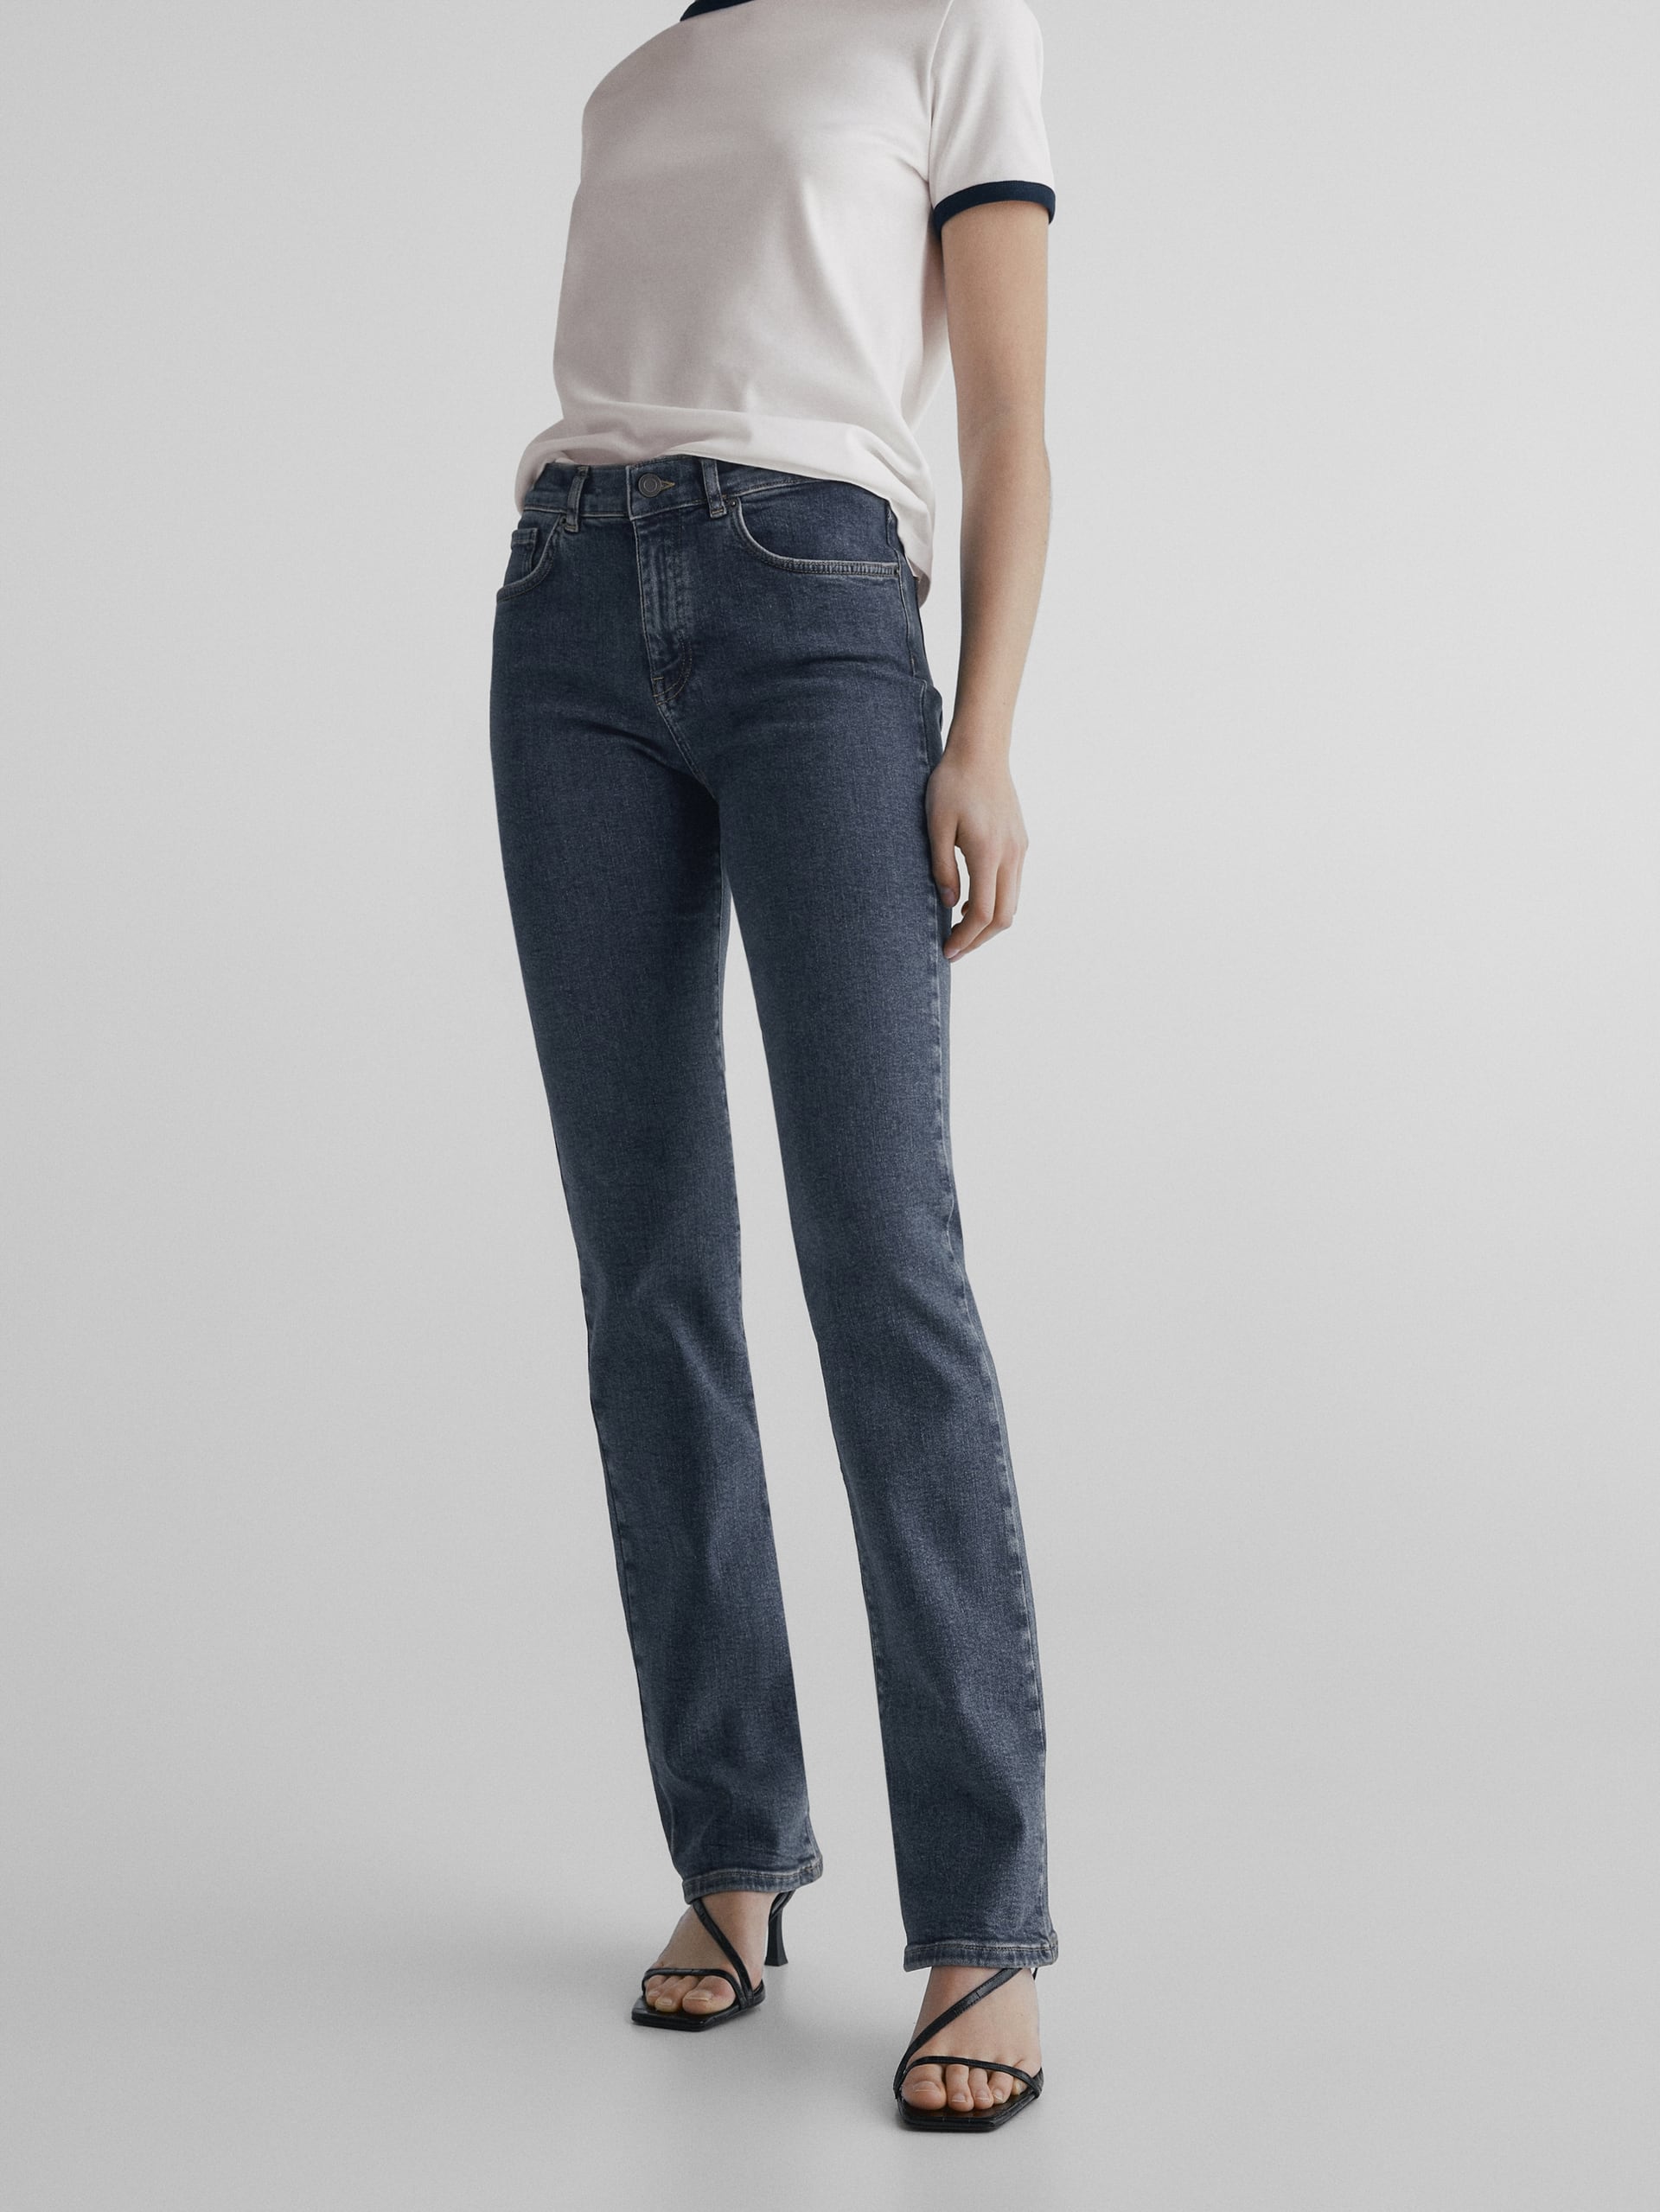 kant George Hanbury Harmonisch High-waist straight cut stretch jeans - Mid-blue | ZARA United States